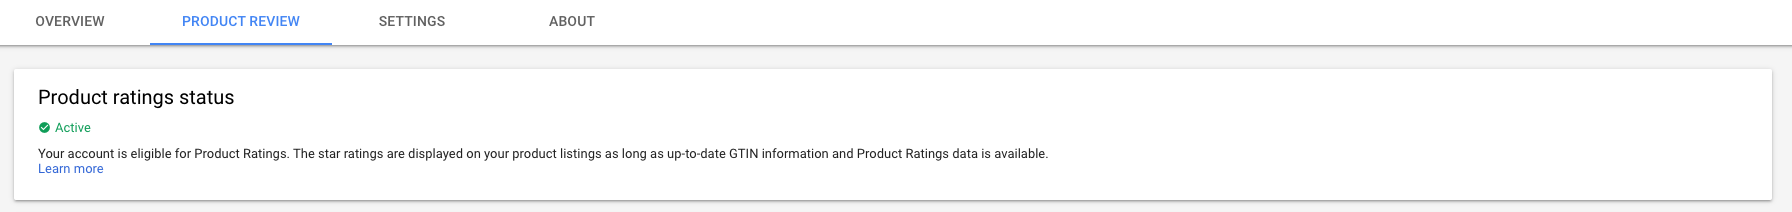 Customer Review Setup - aktywacja Product ratings status